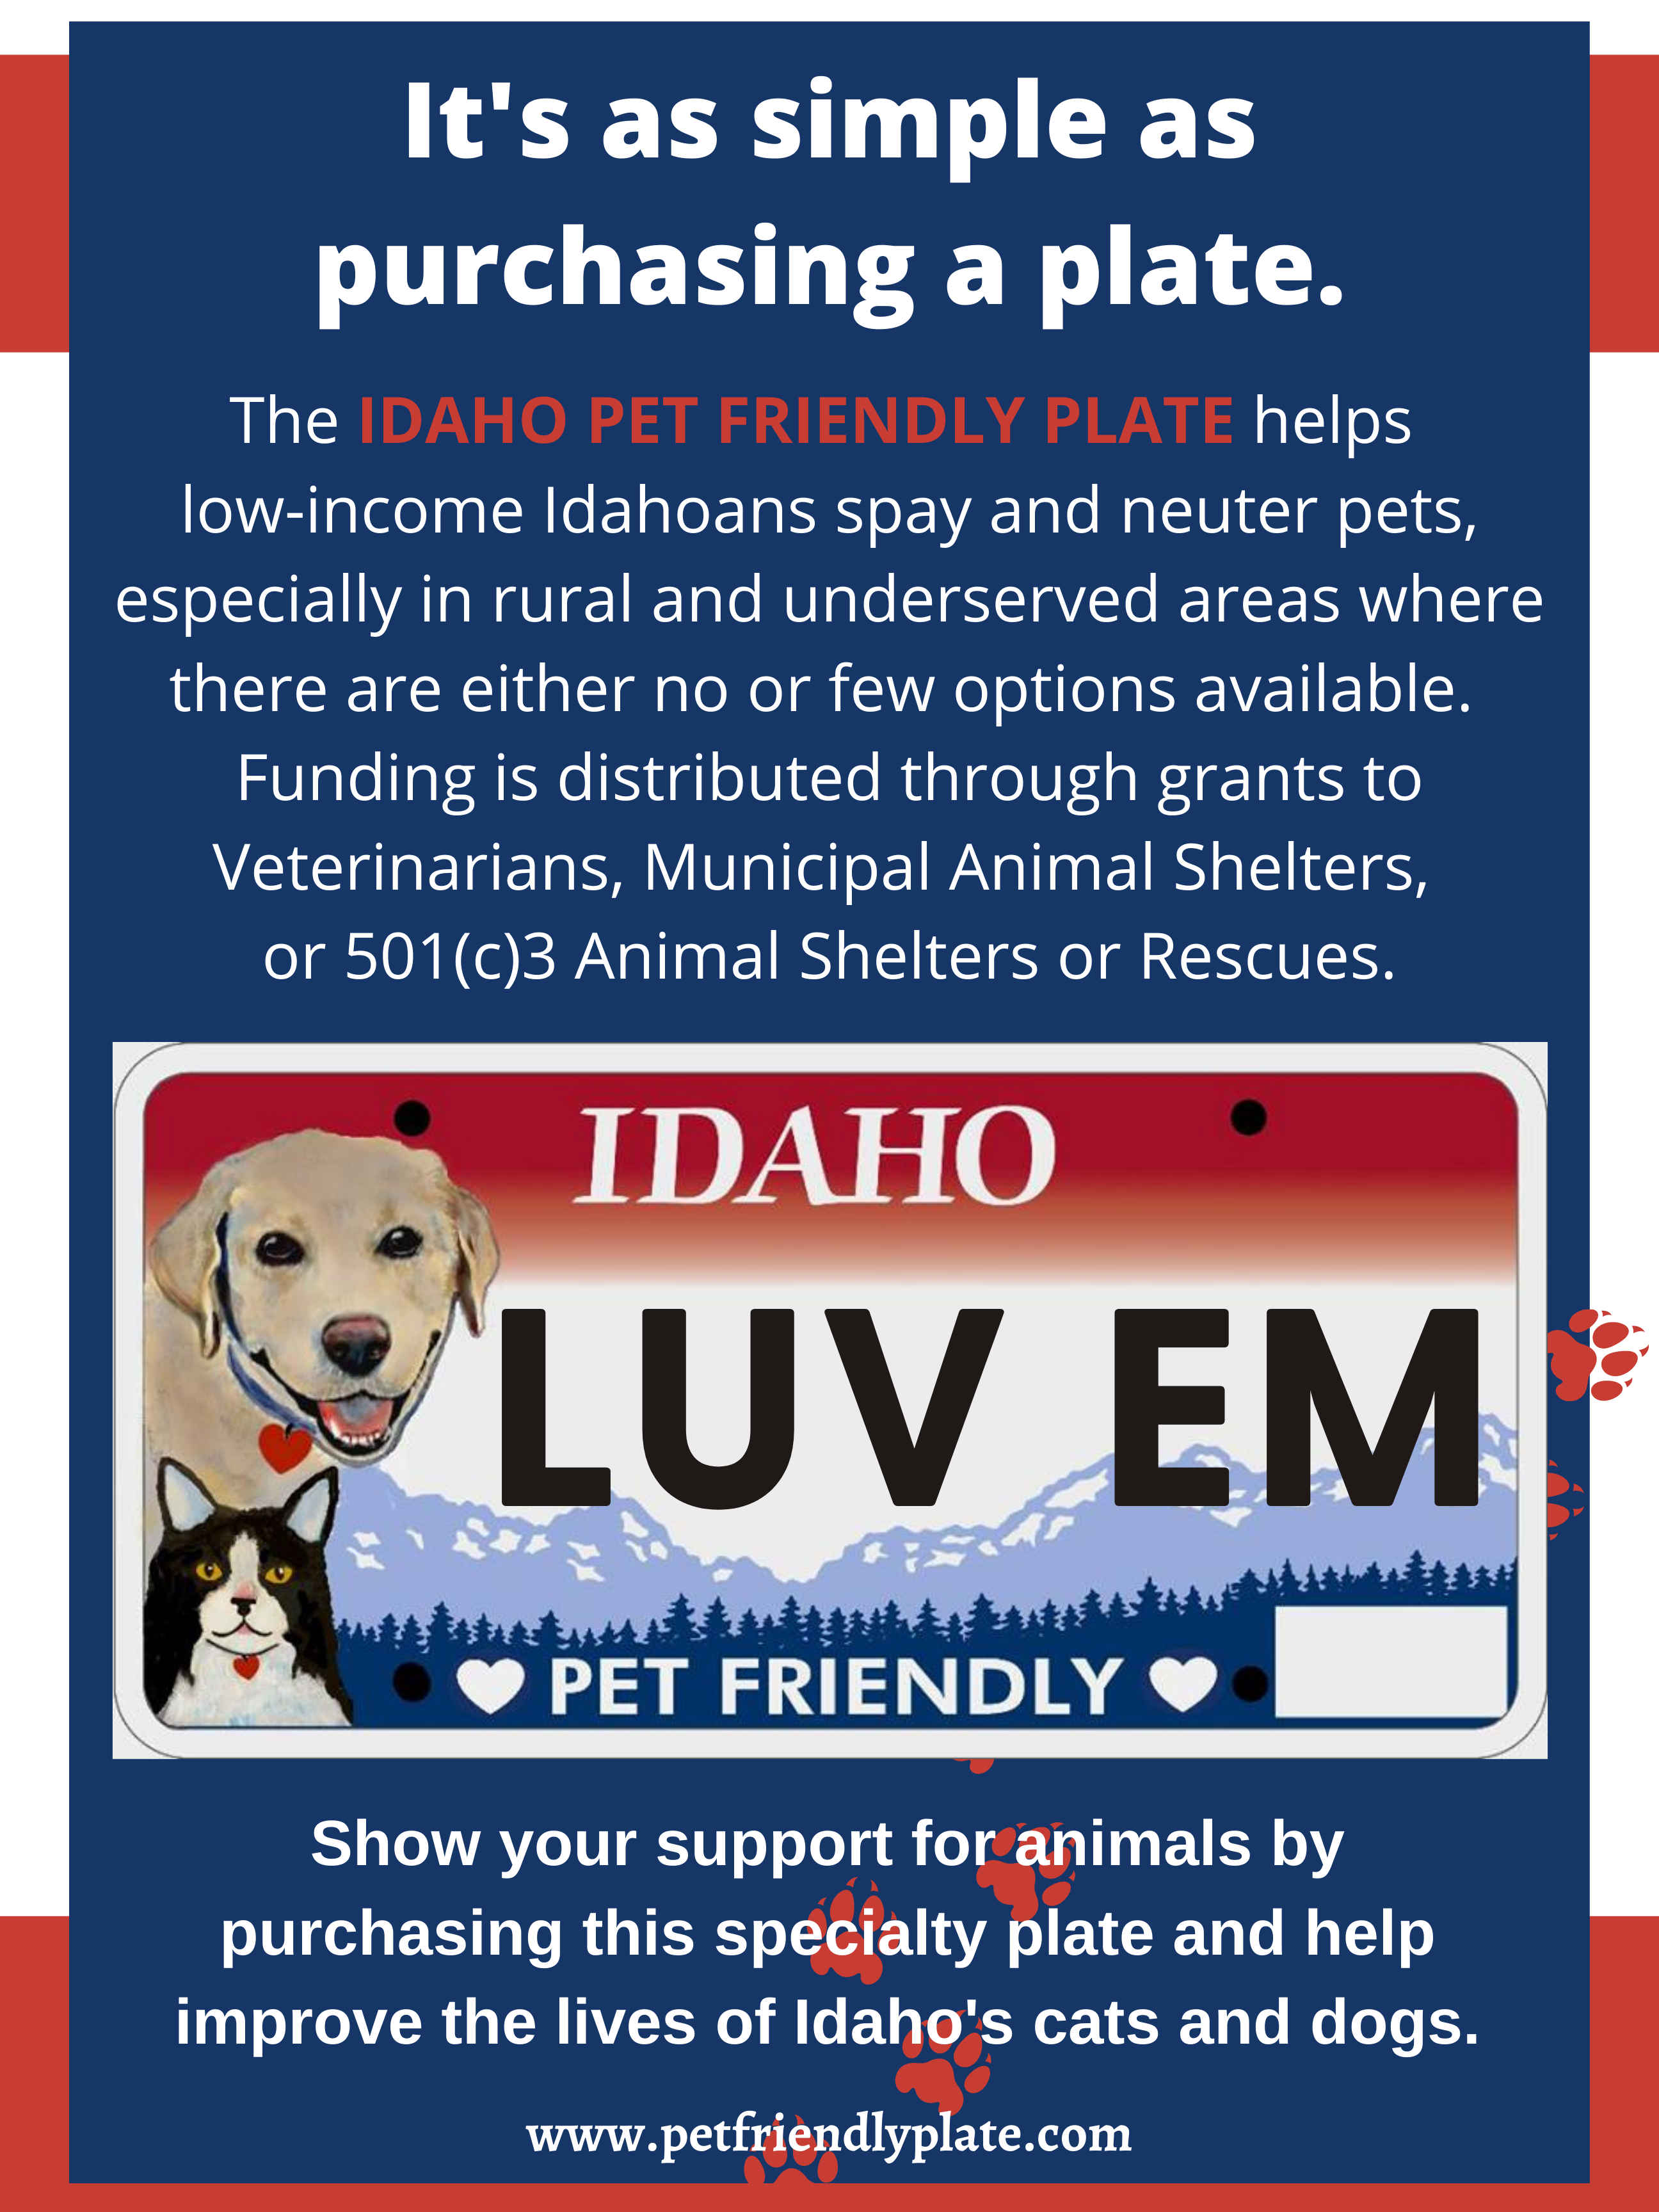 Idaho Pet Friendly Plate